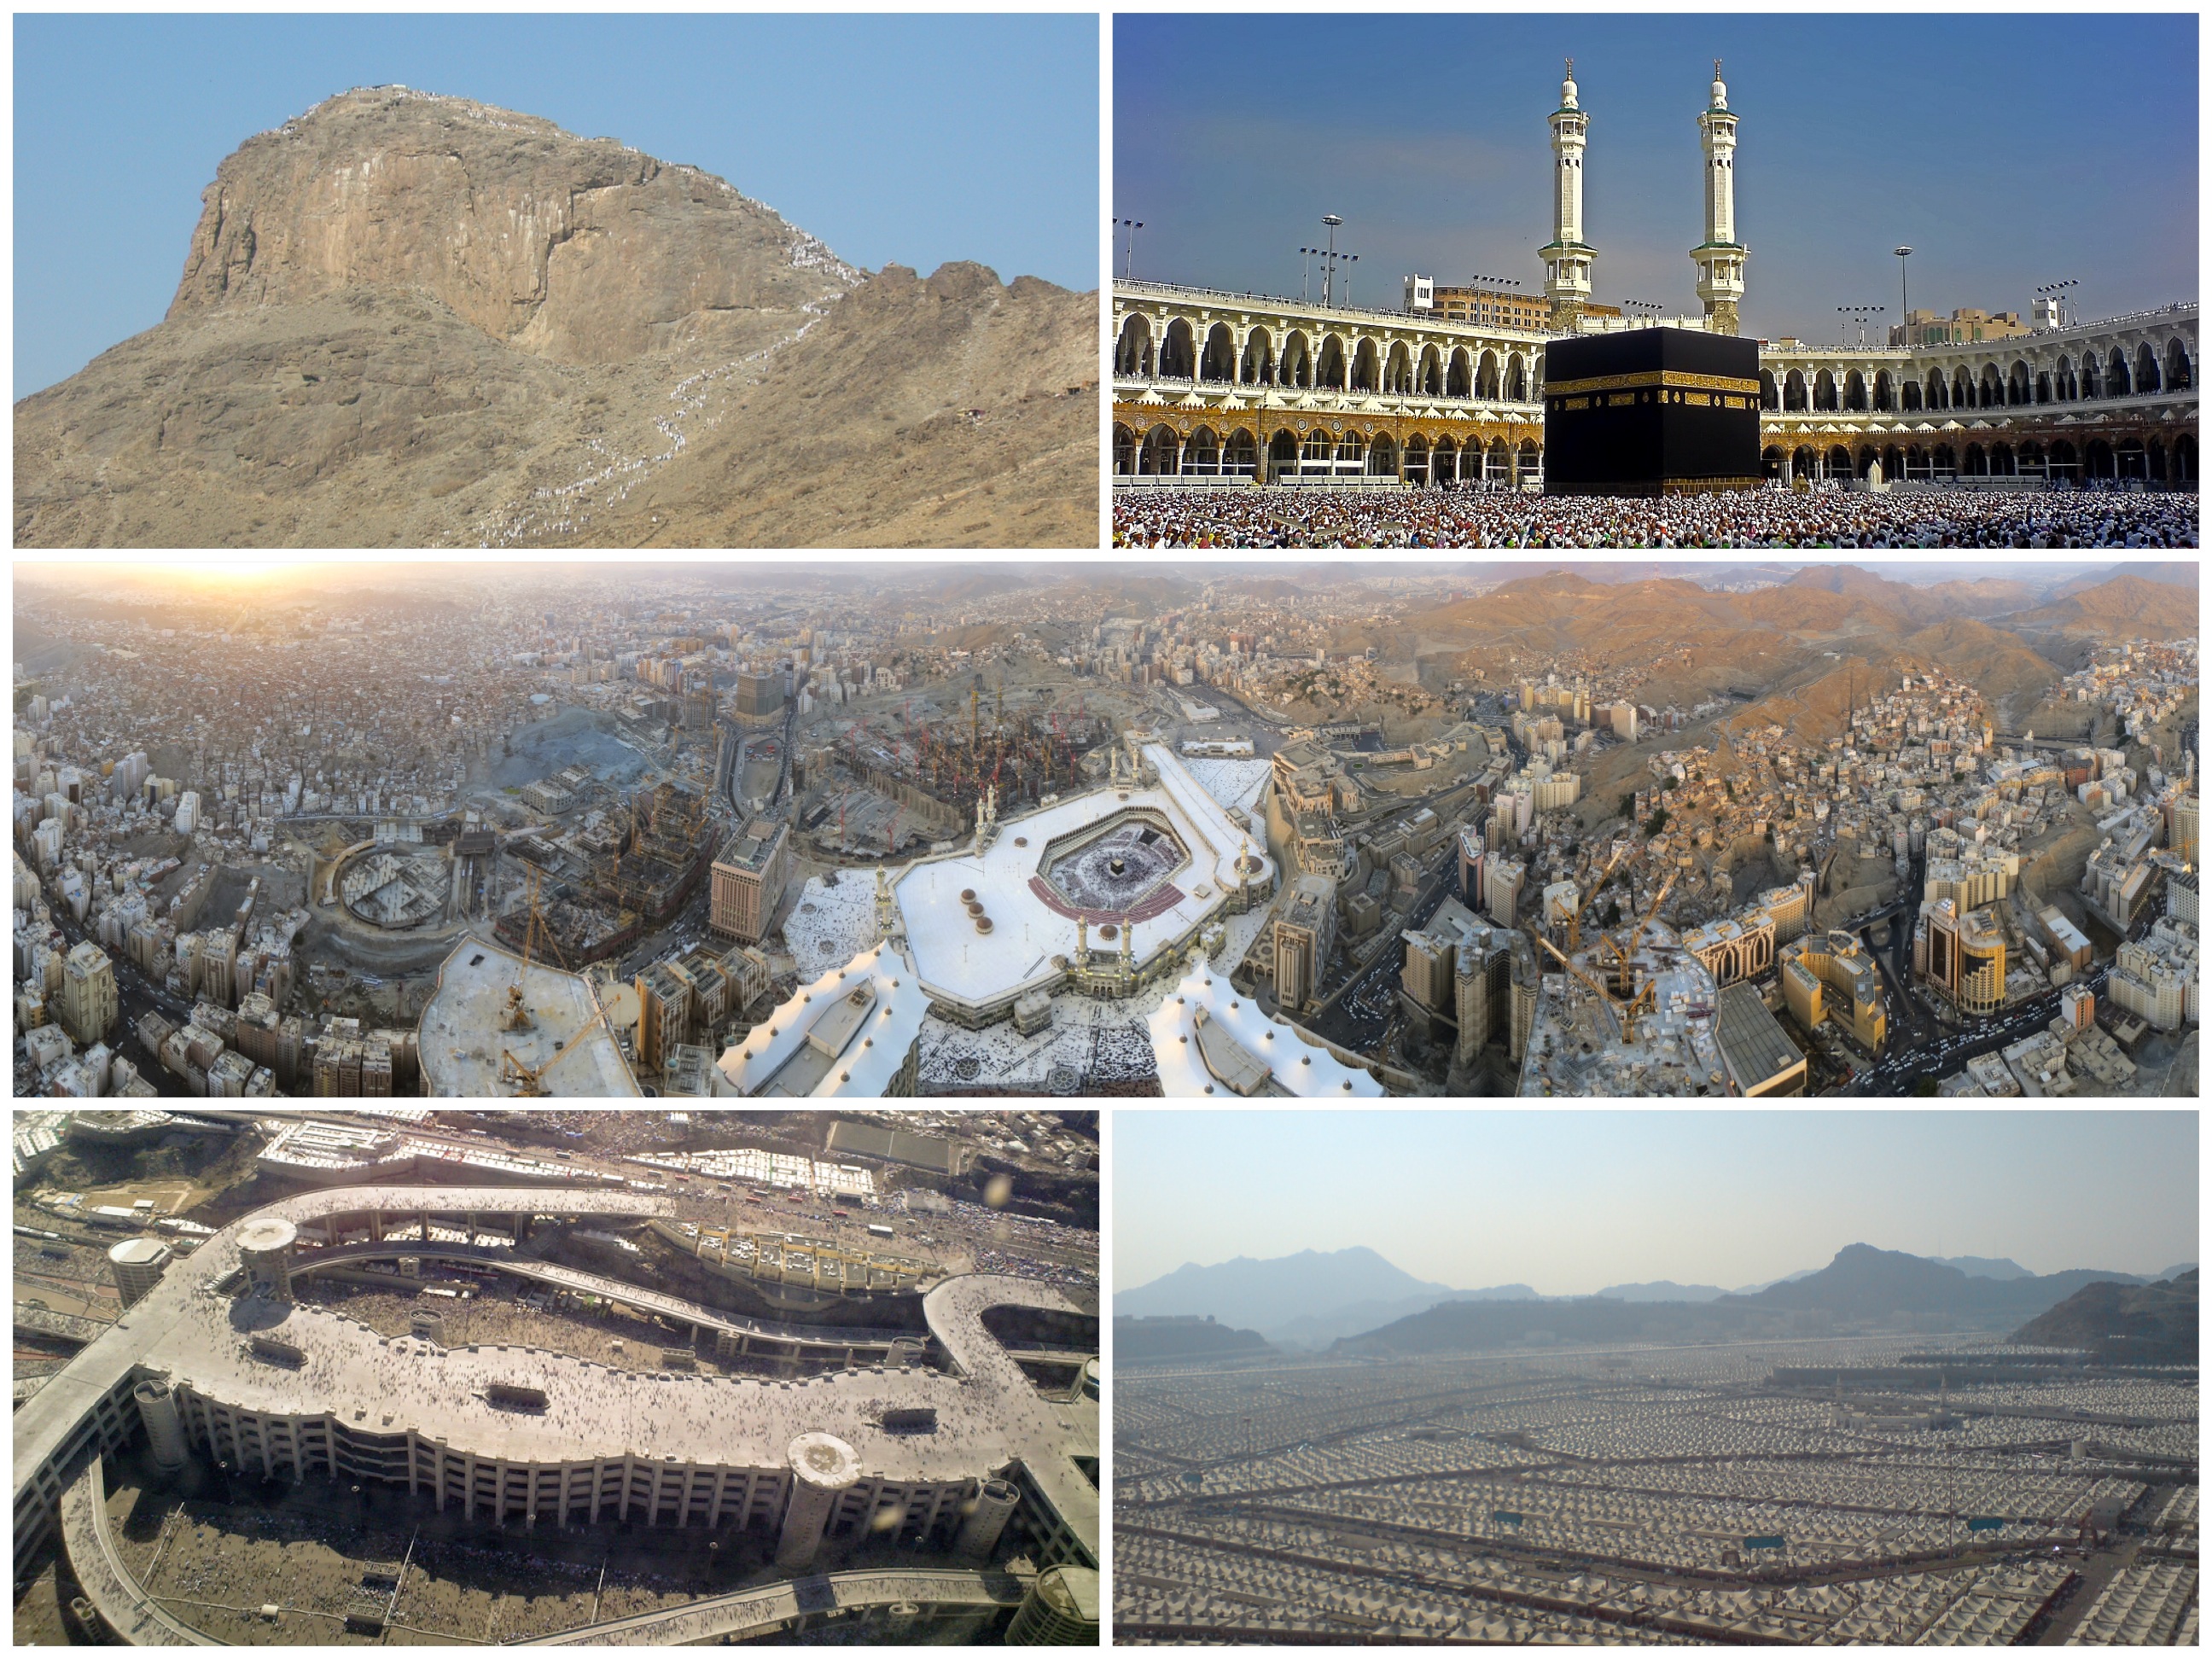 Mecca - Wikipedia